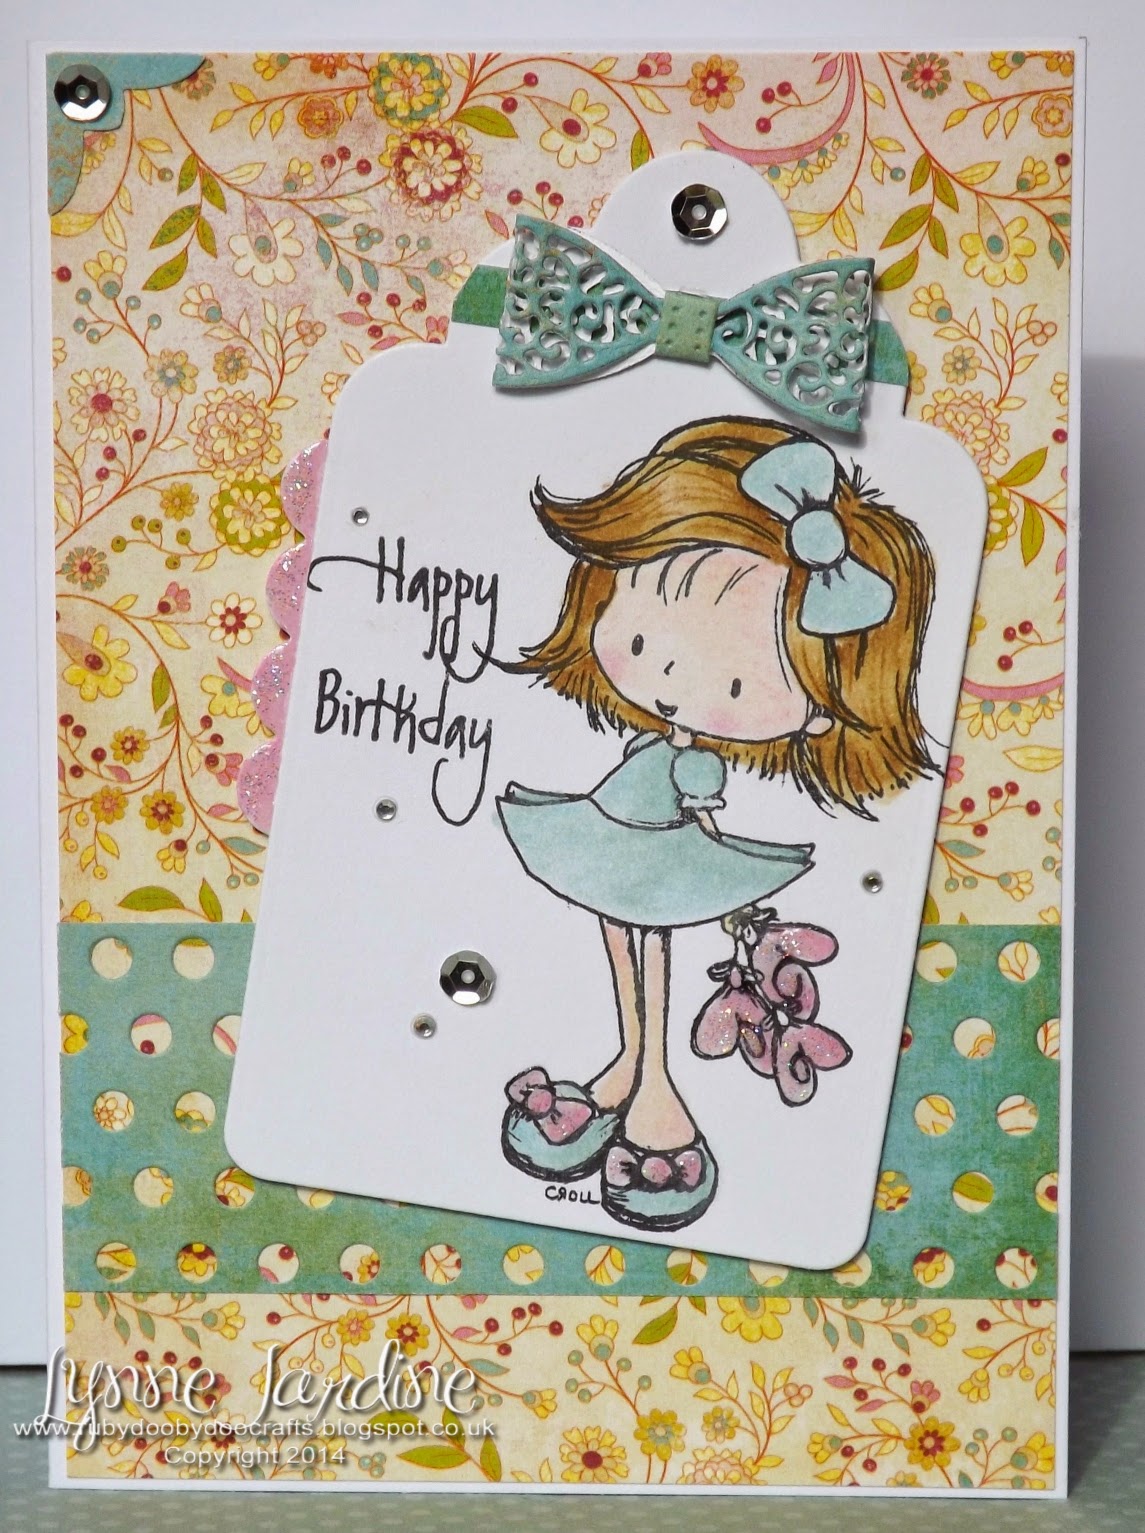 Ruby-Dooby-Doo Crafts: Birthday Tag card